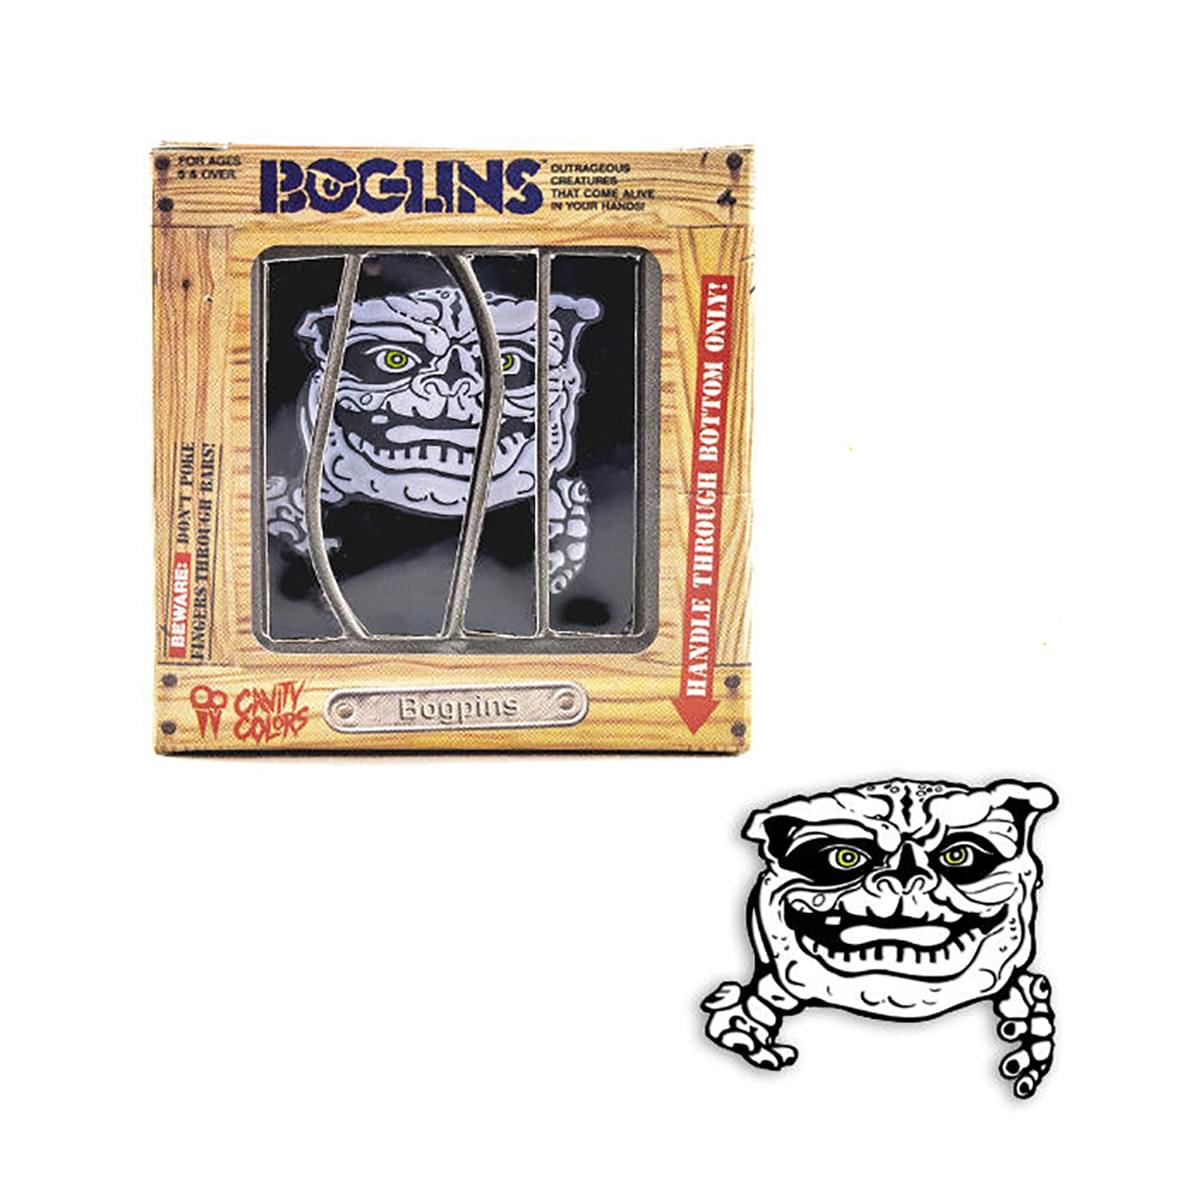 Boglins Dark Lord Bog-o-Bones Collectable Pin